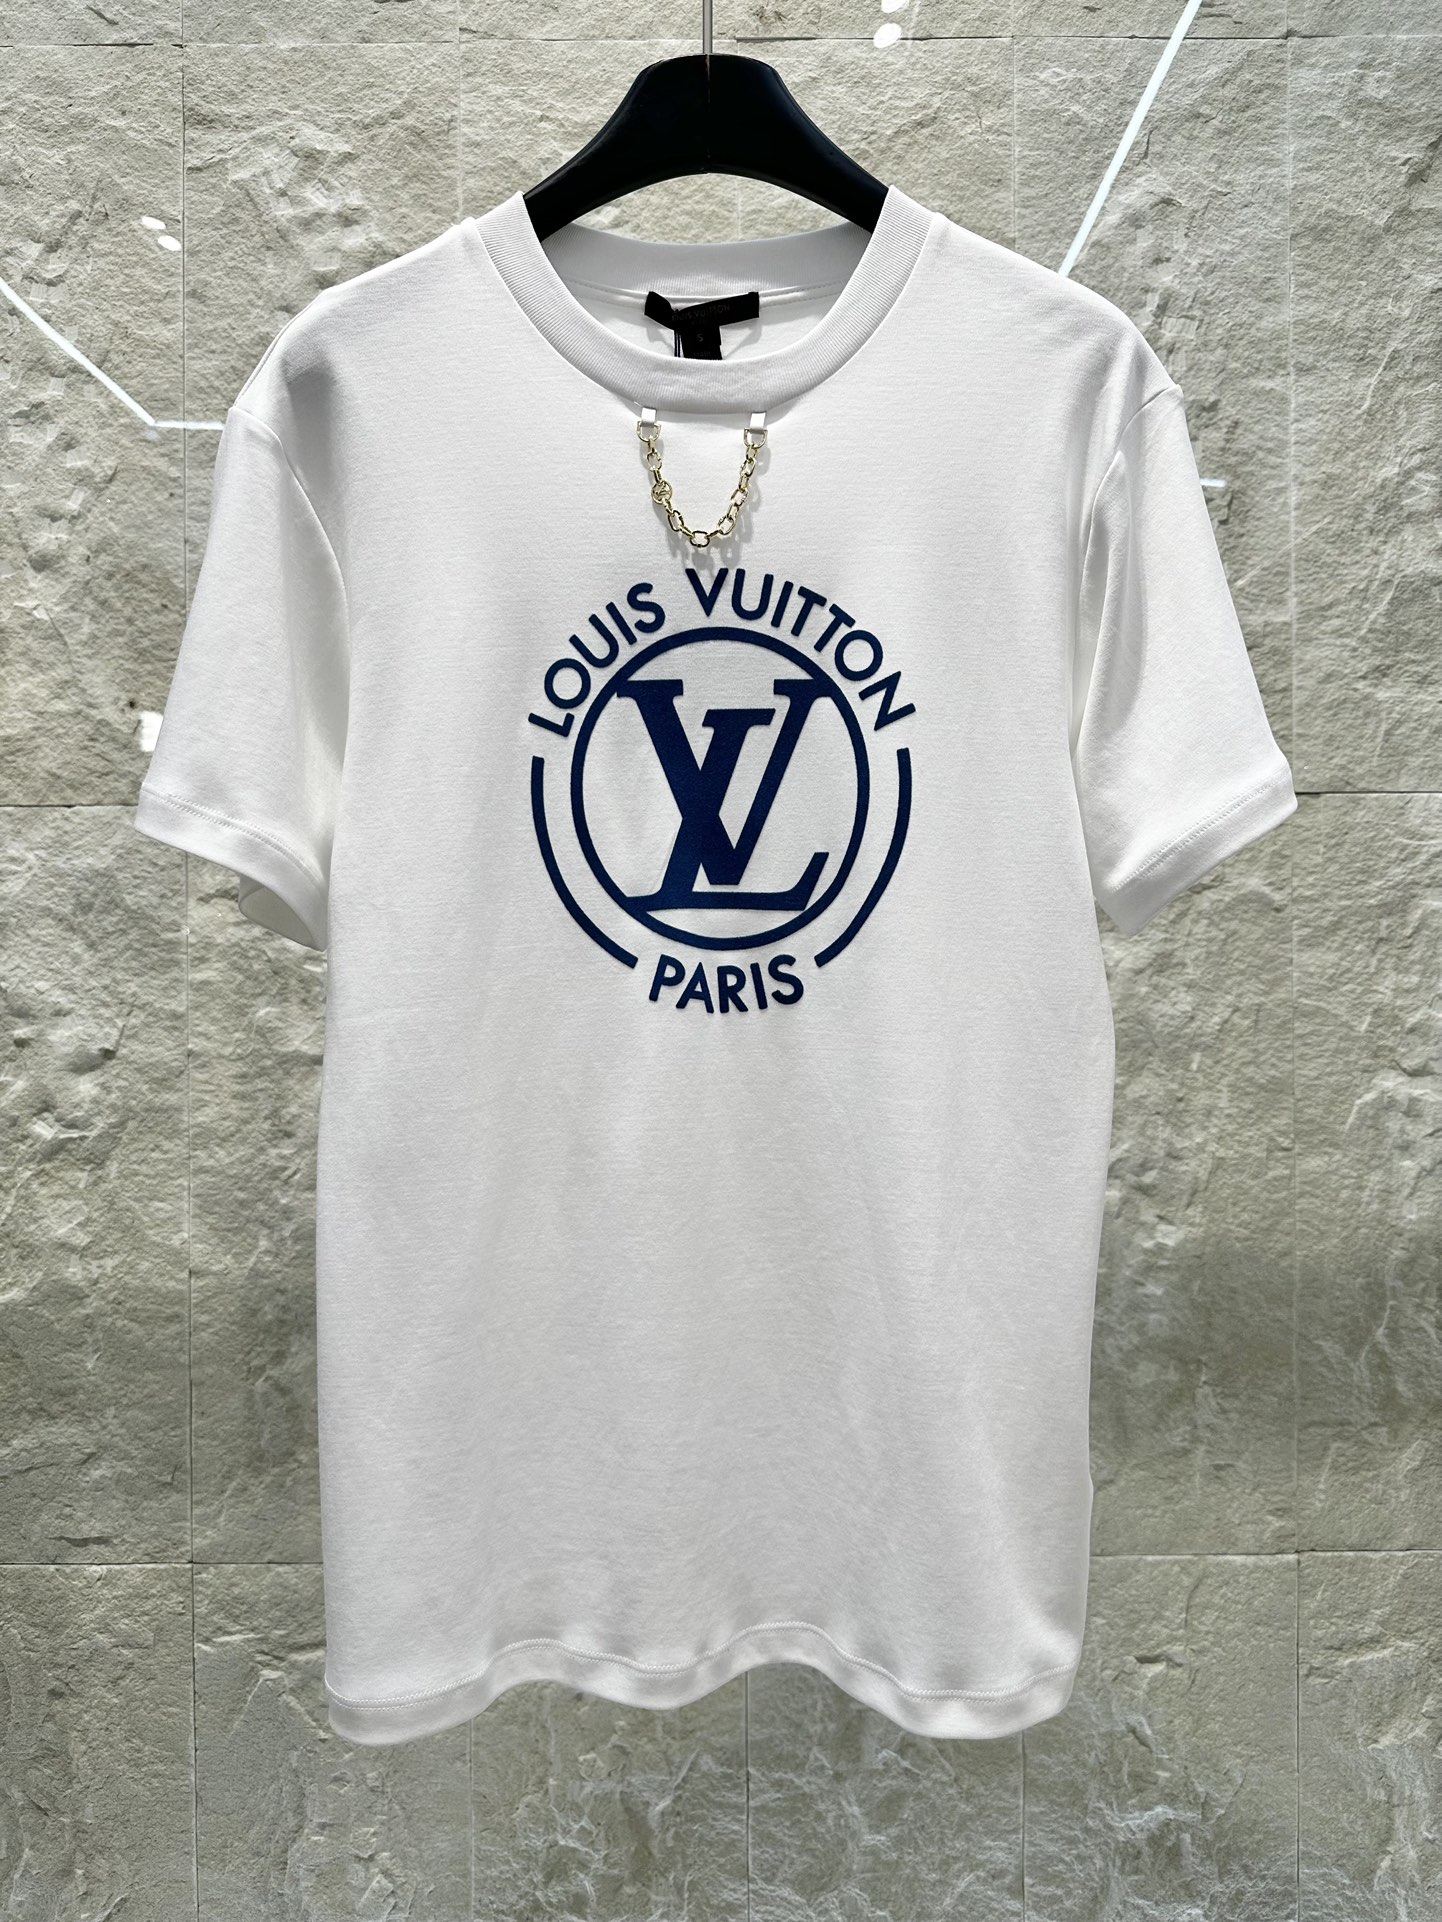 Louis Vuitton Kleding T-Shirt Zomercollectie